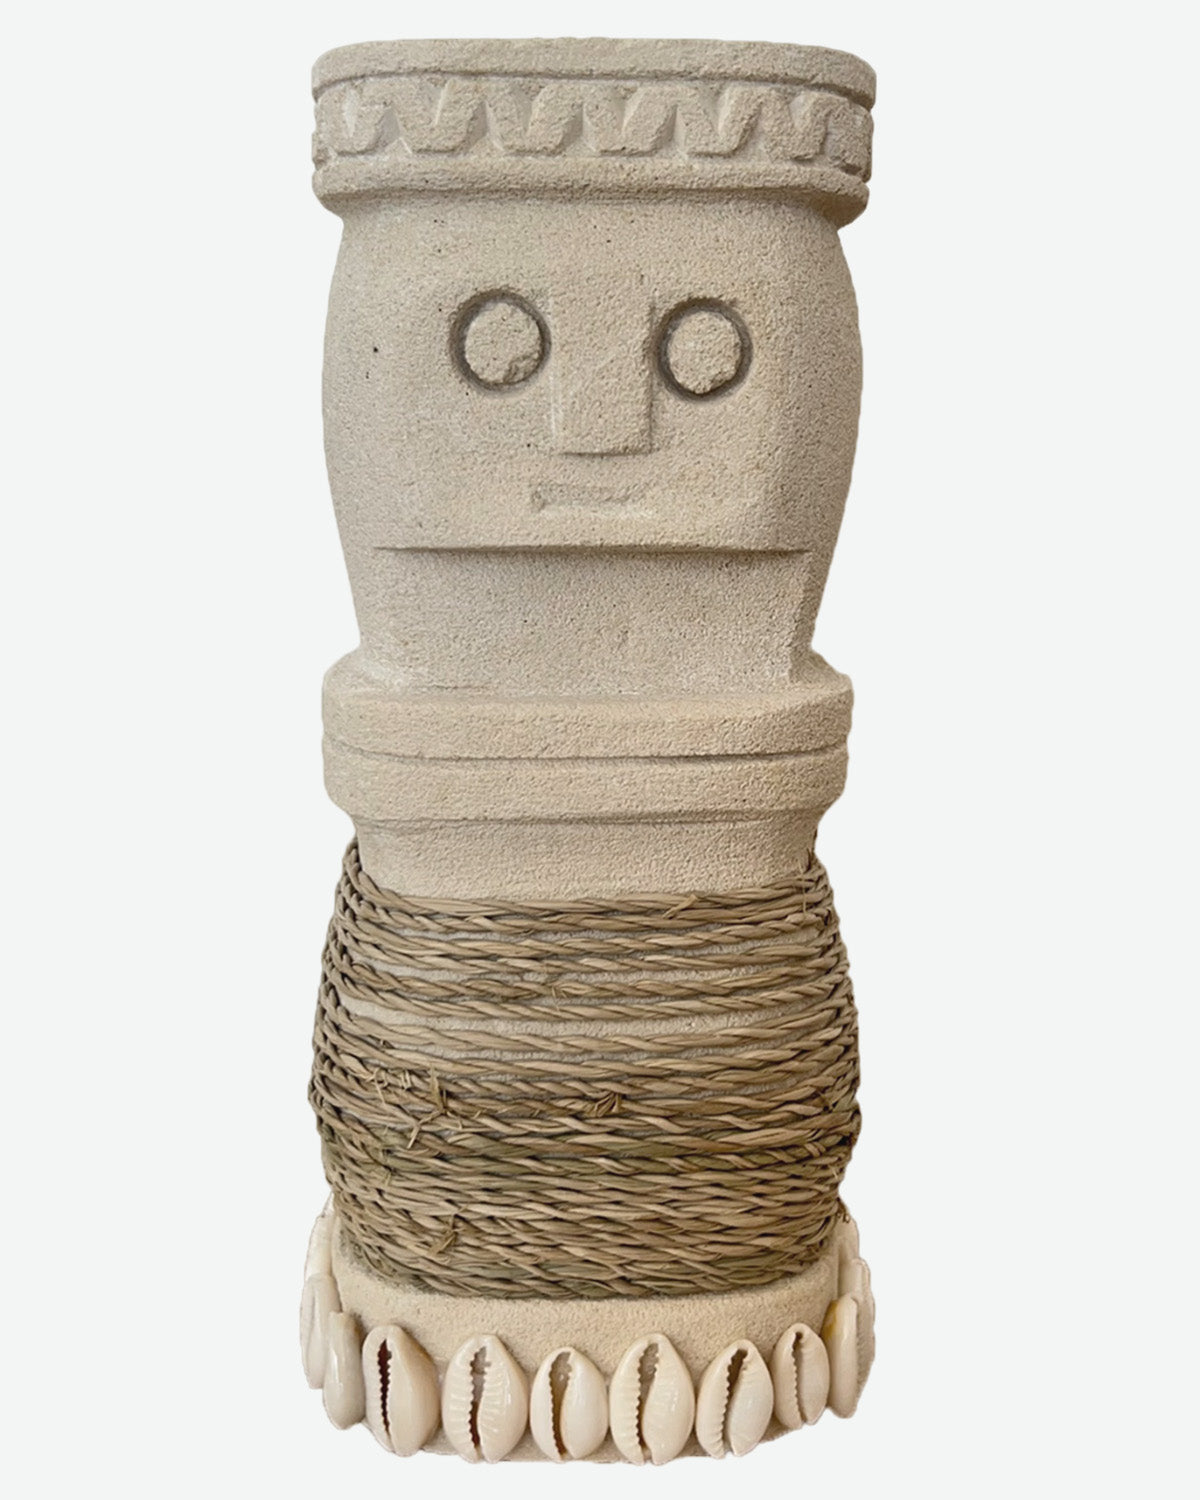 Decorative figure Merapi